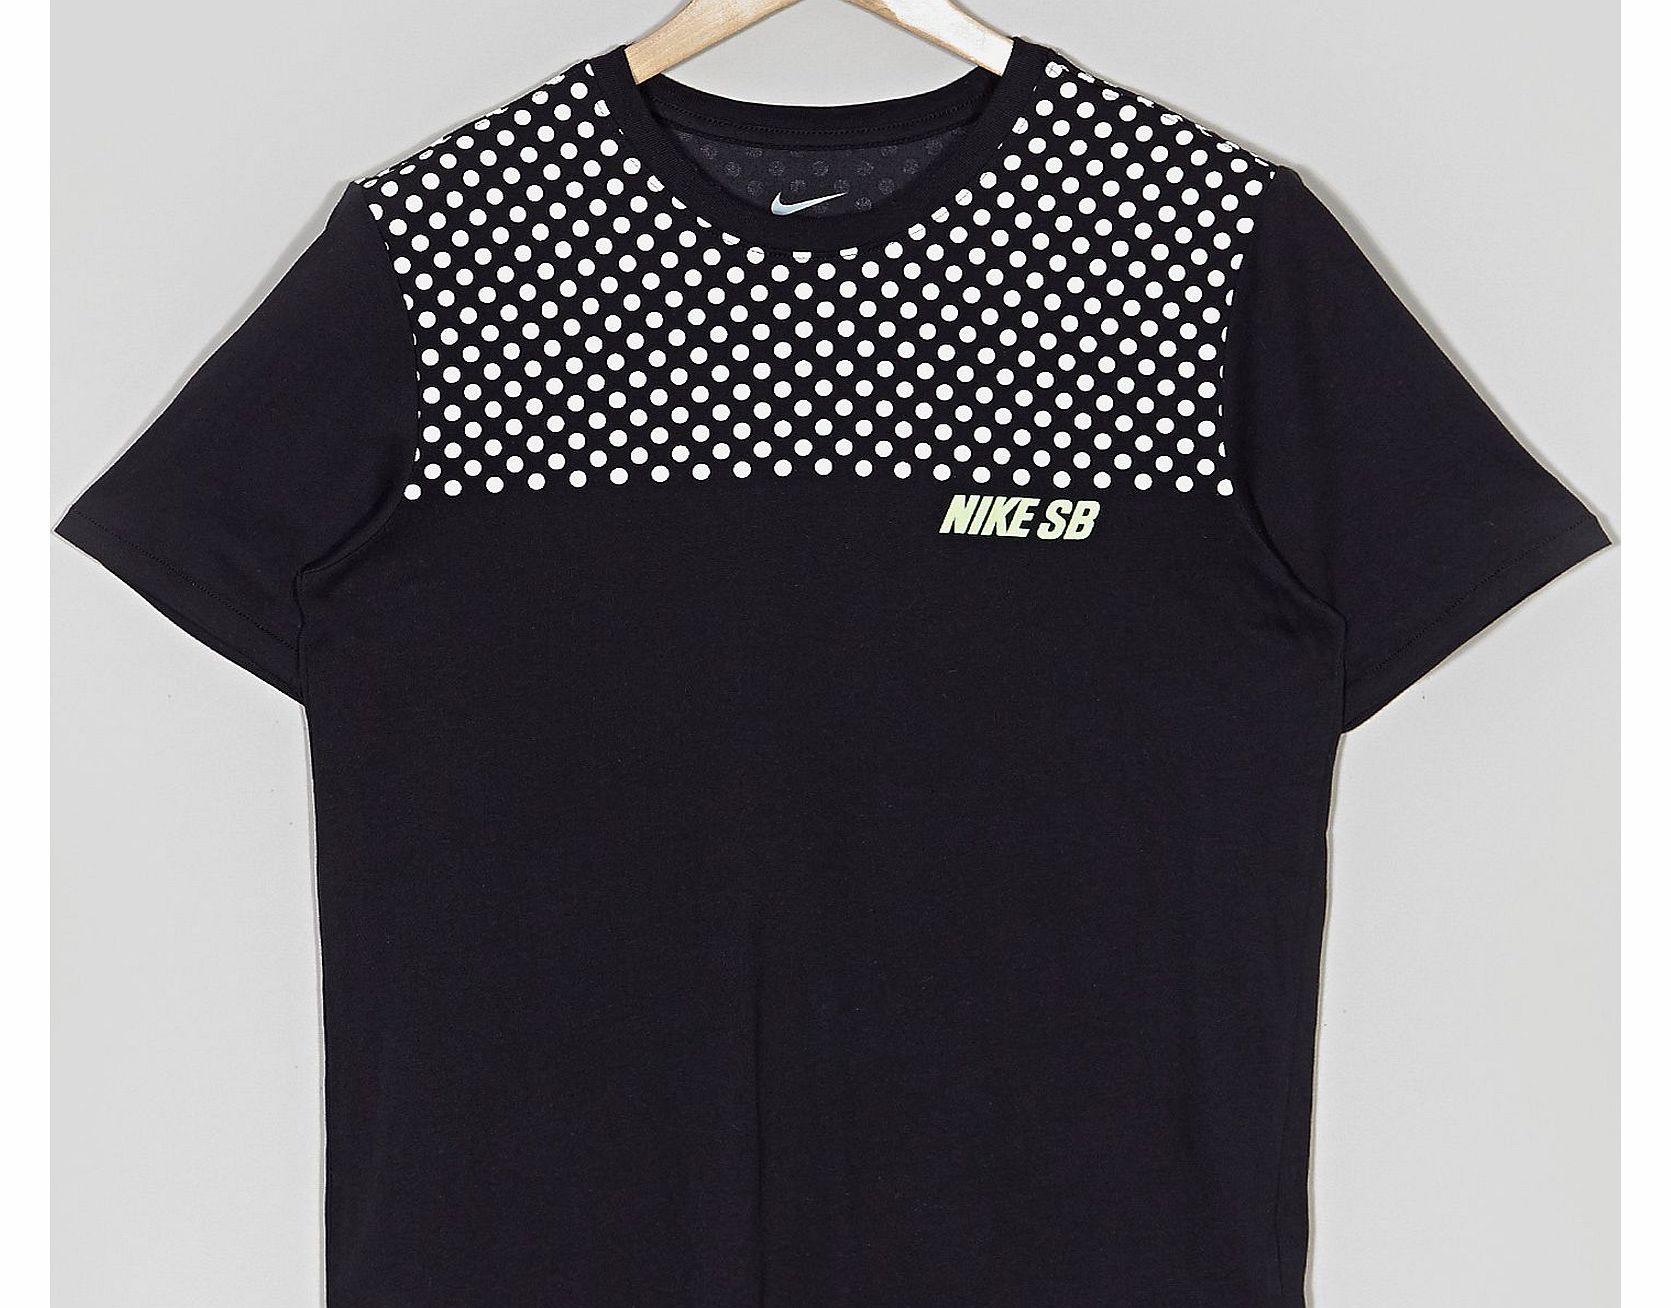 Nike SB Polka Dot T-Shirt